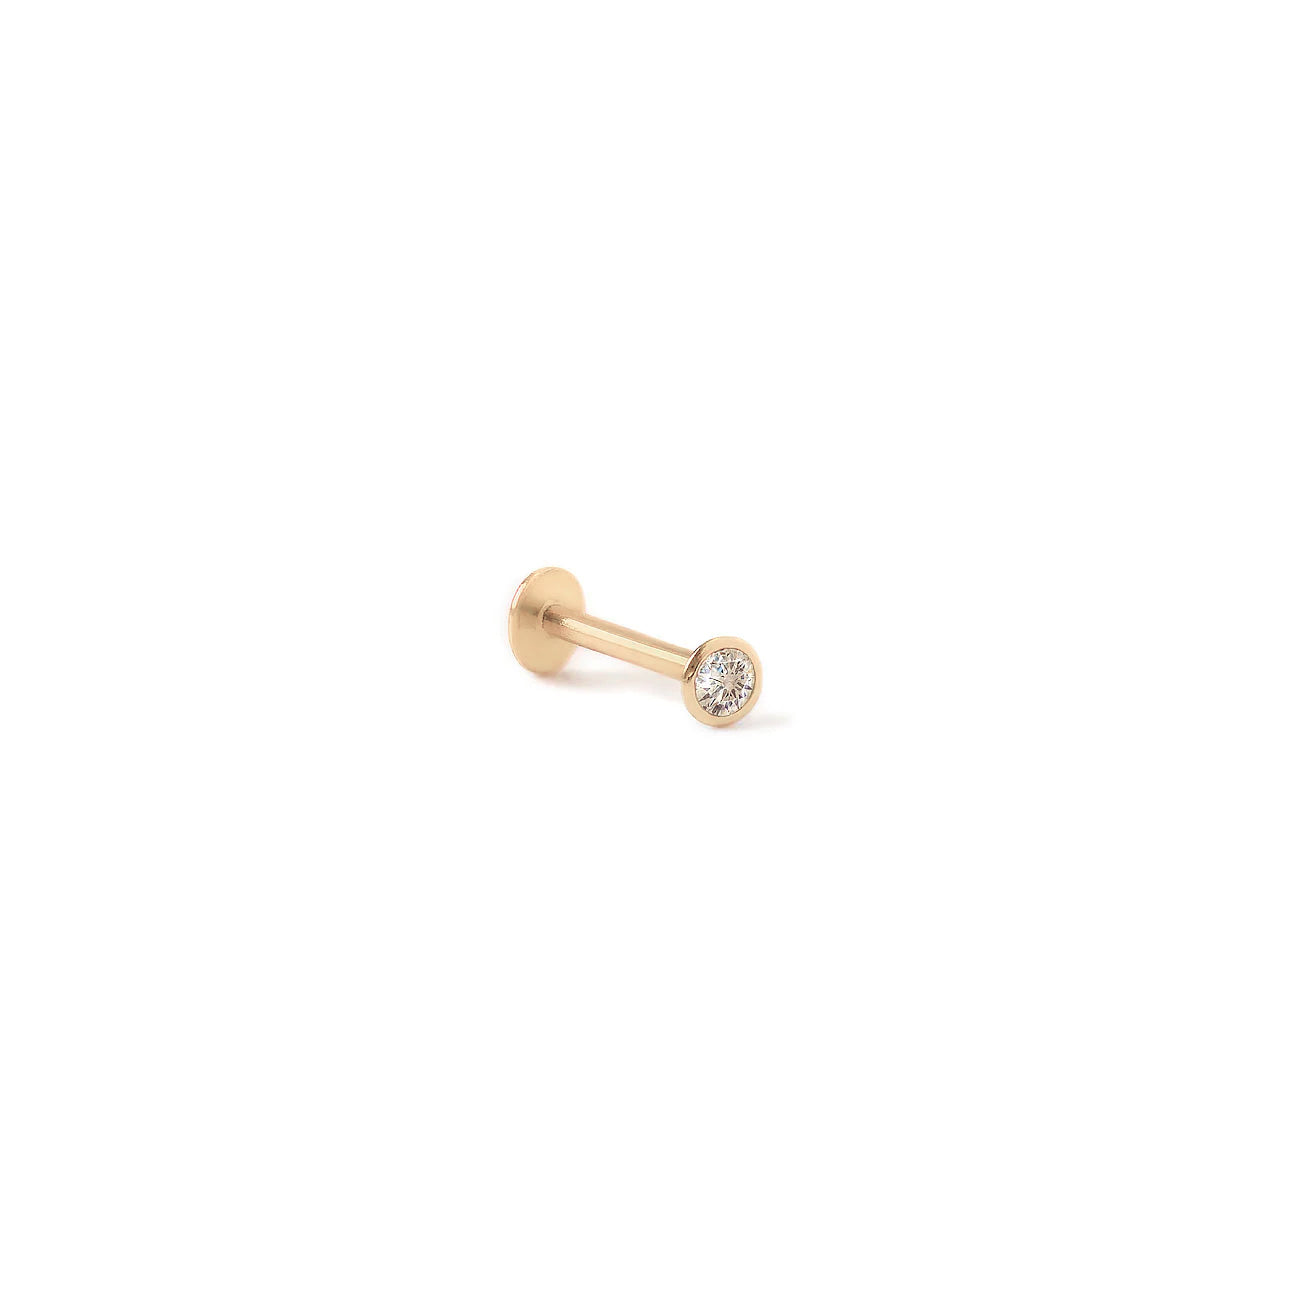 Flat Back Stud Earring 14K Gold, Helix Tragus Flat Conch Piercings 14K Gold / 2.5mm / Push Pin